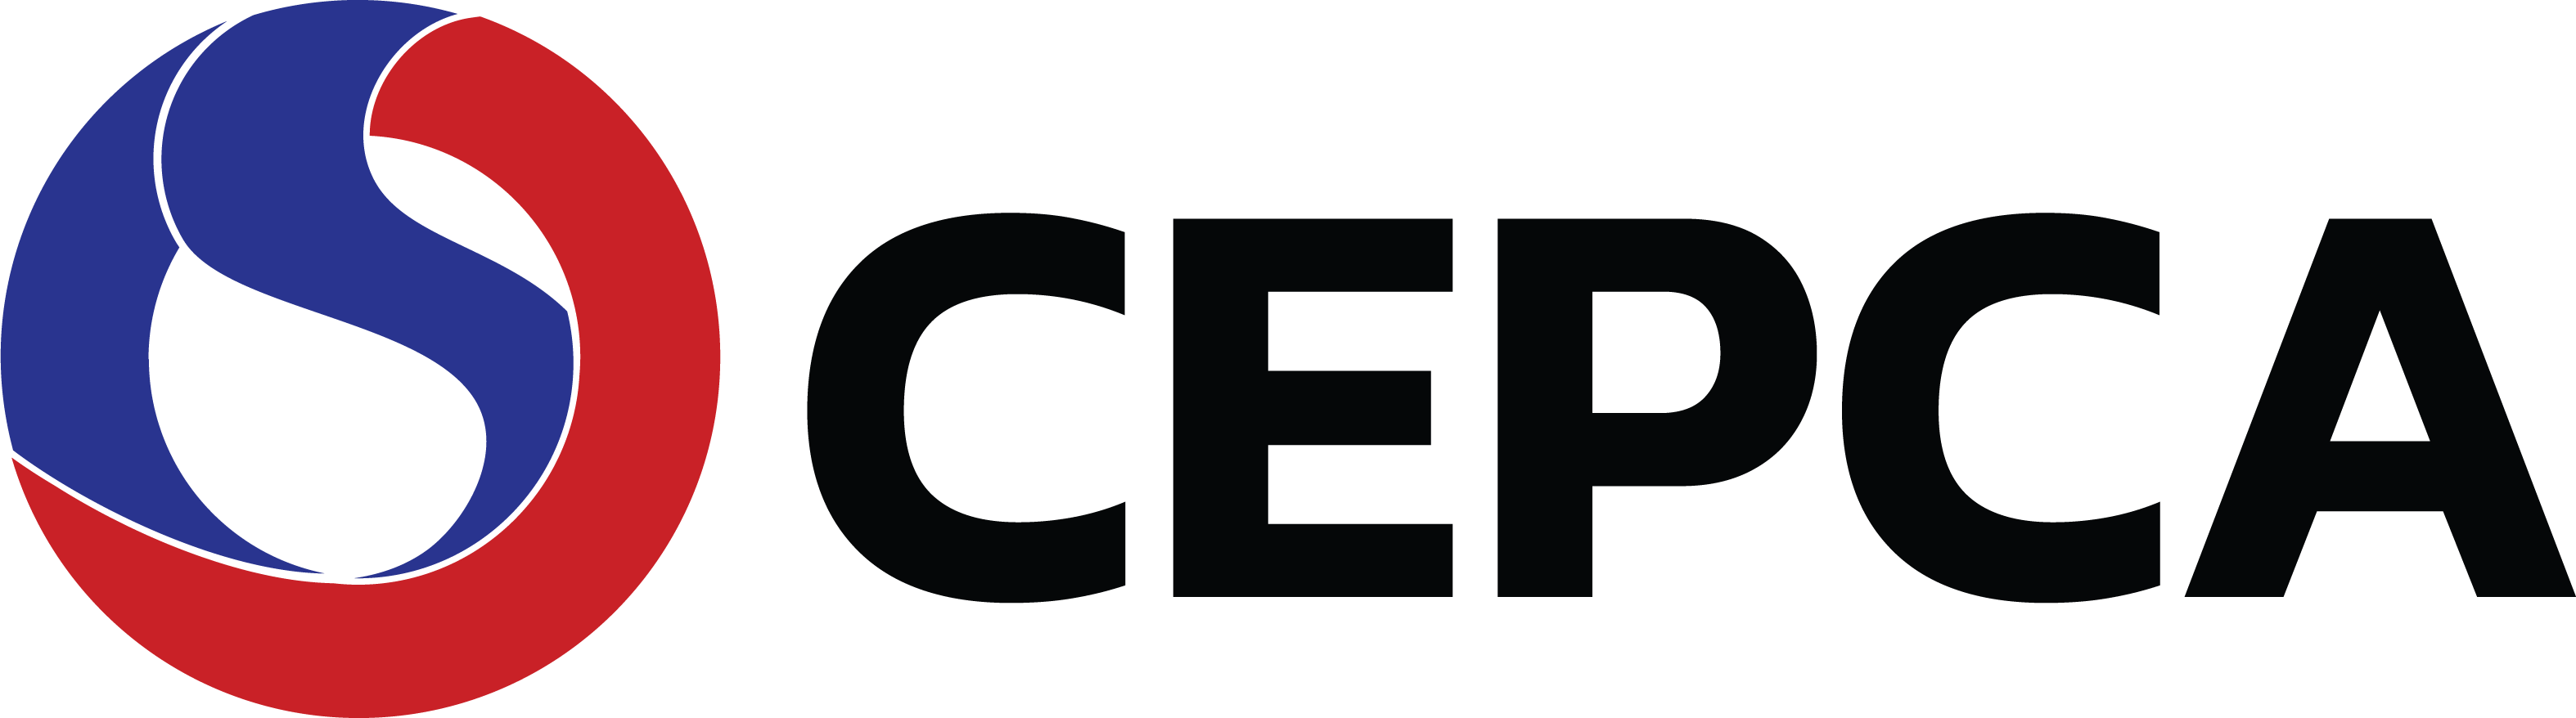 CEPCA Simplified